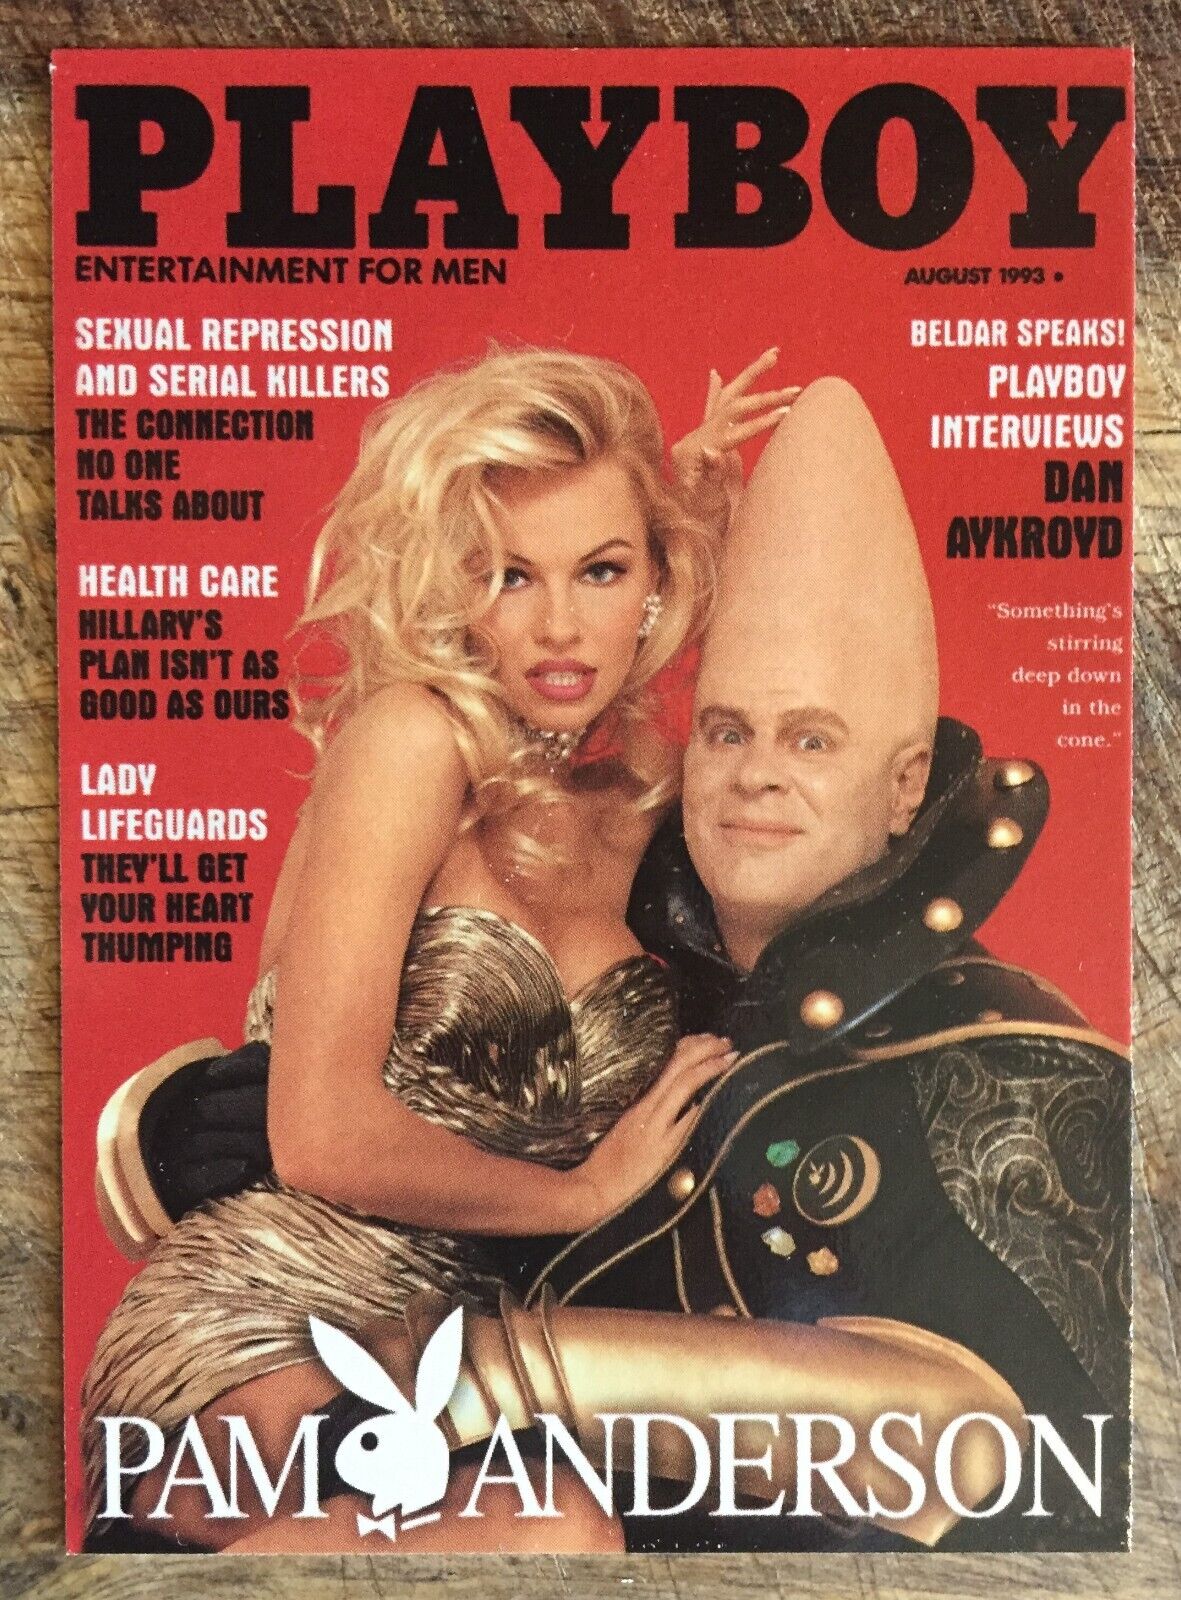 1996 Playboy Pamela Anderson Collection #88 / August 1993 Cover w/ Dan Aykroyd